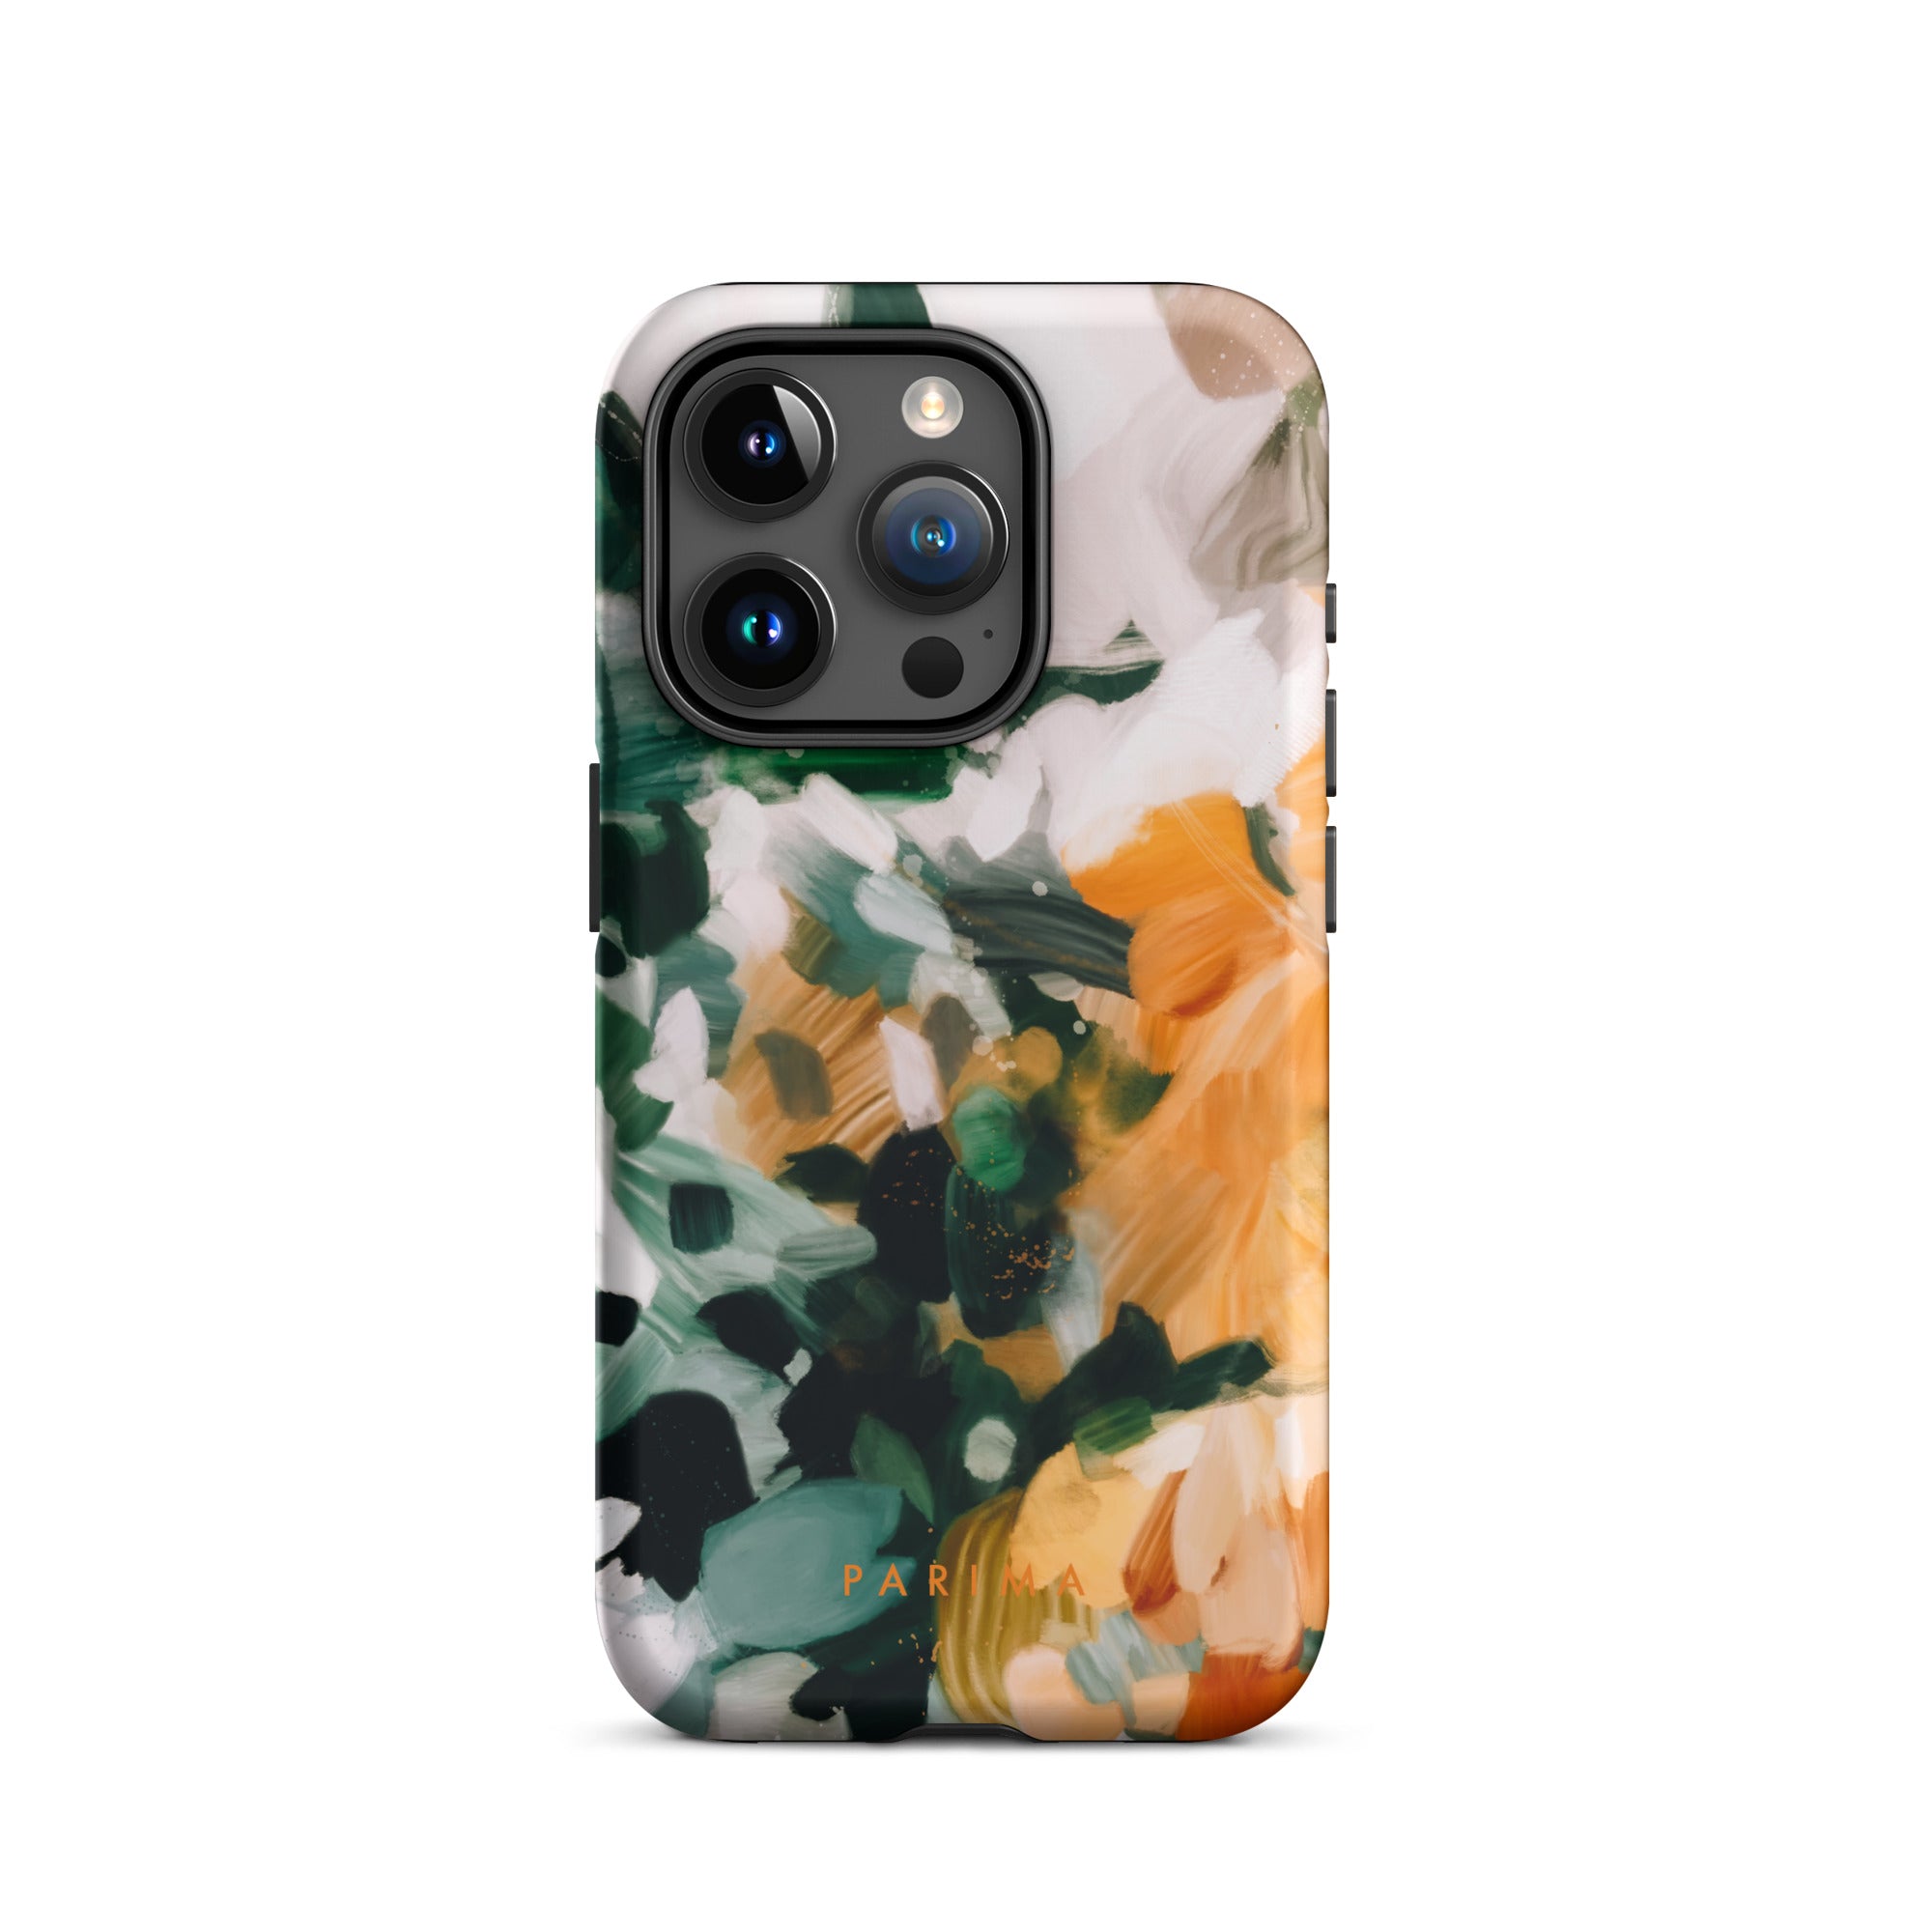 Aspen, green and orange abstract art - iPhone 15 Pro tough case by Parima Studio